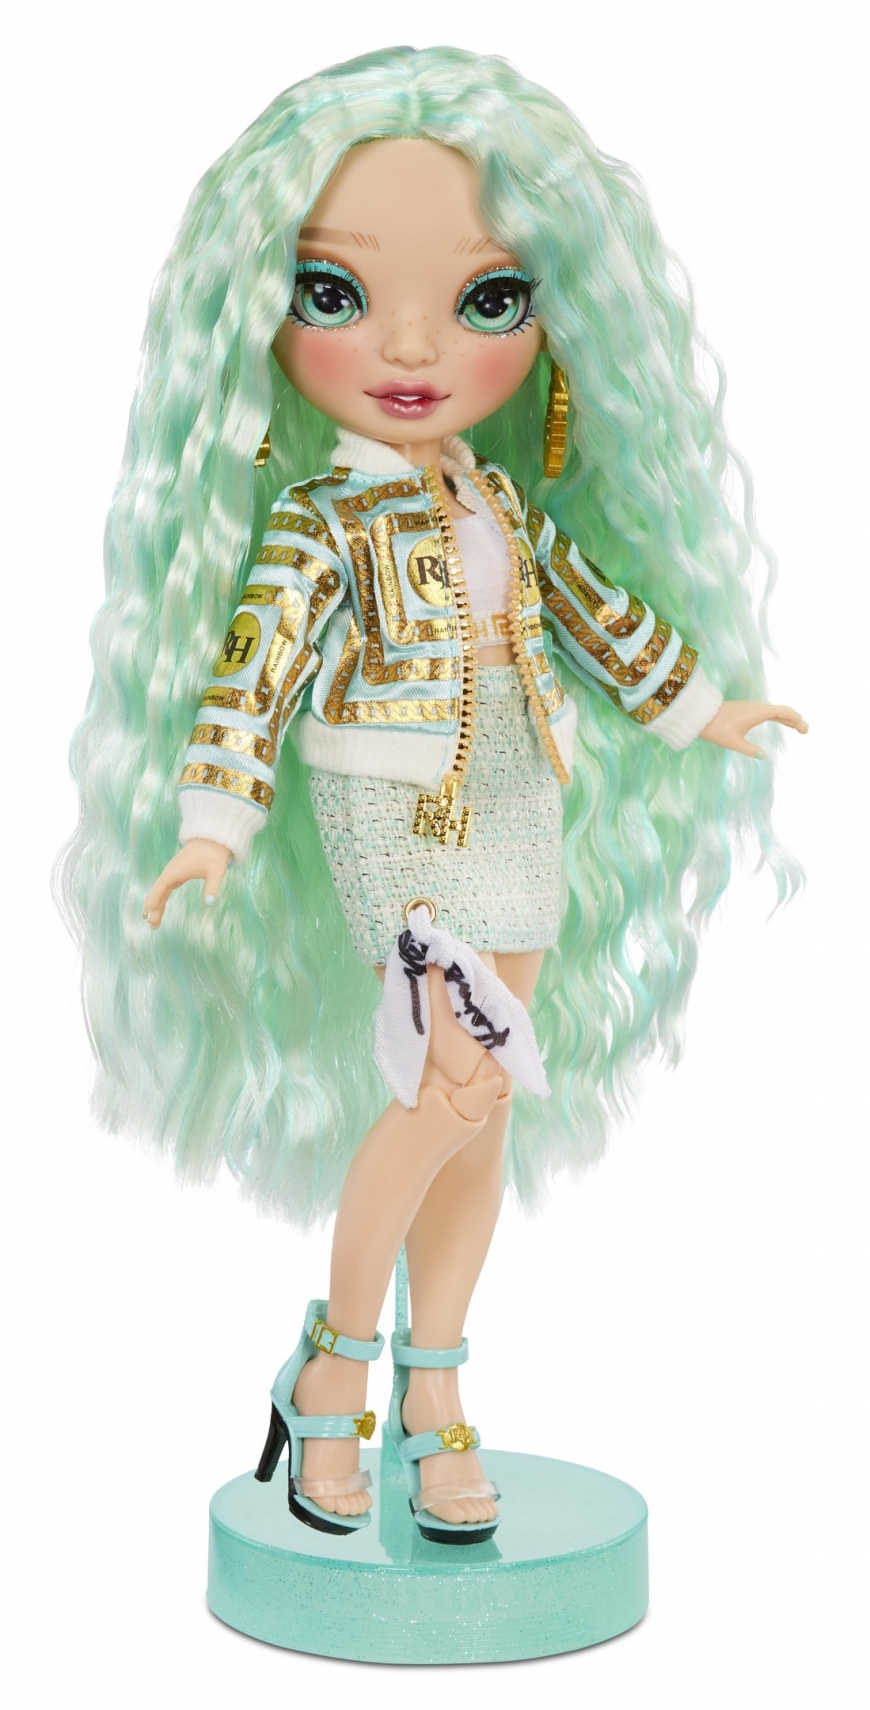 Rainbow High Series 3 Mint Daphne Minton doll